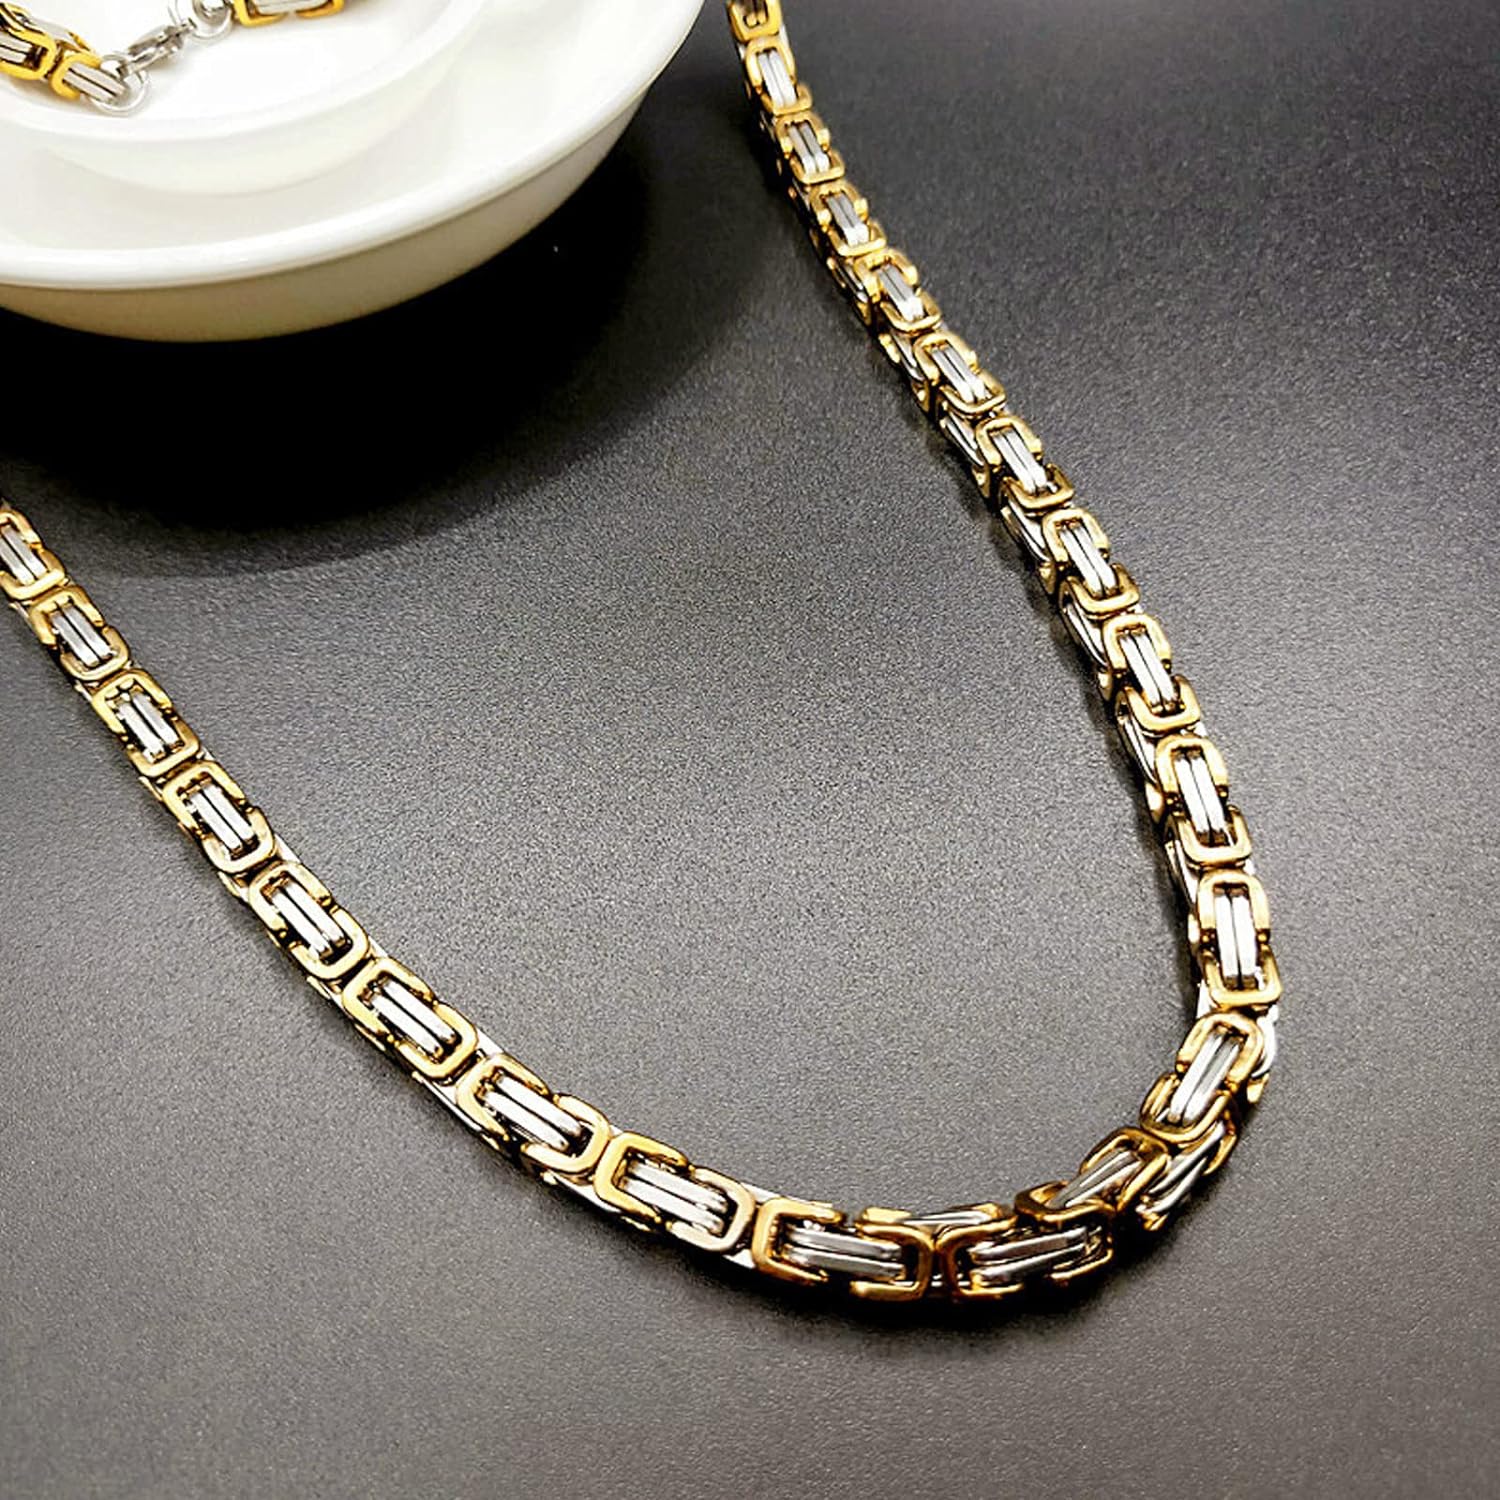 5mm golden silver byzantine link neck chains for men online in Pakistan